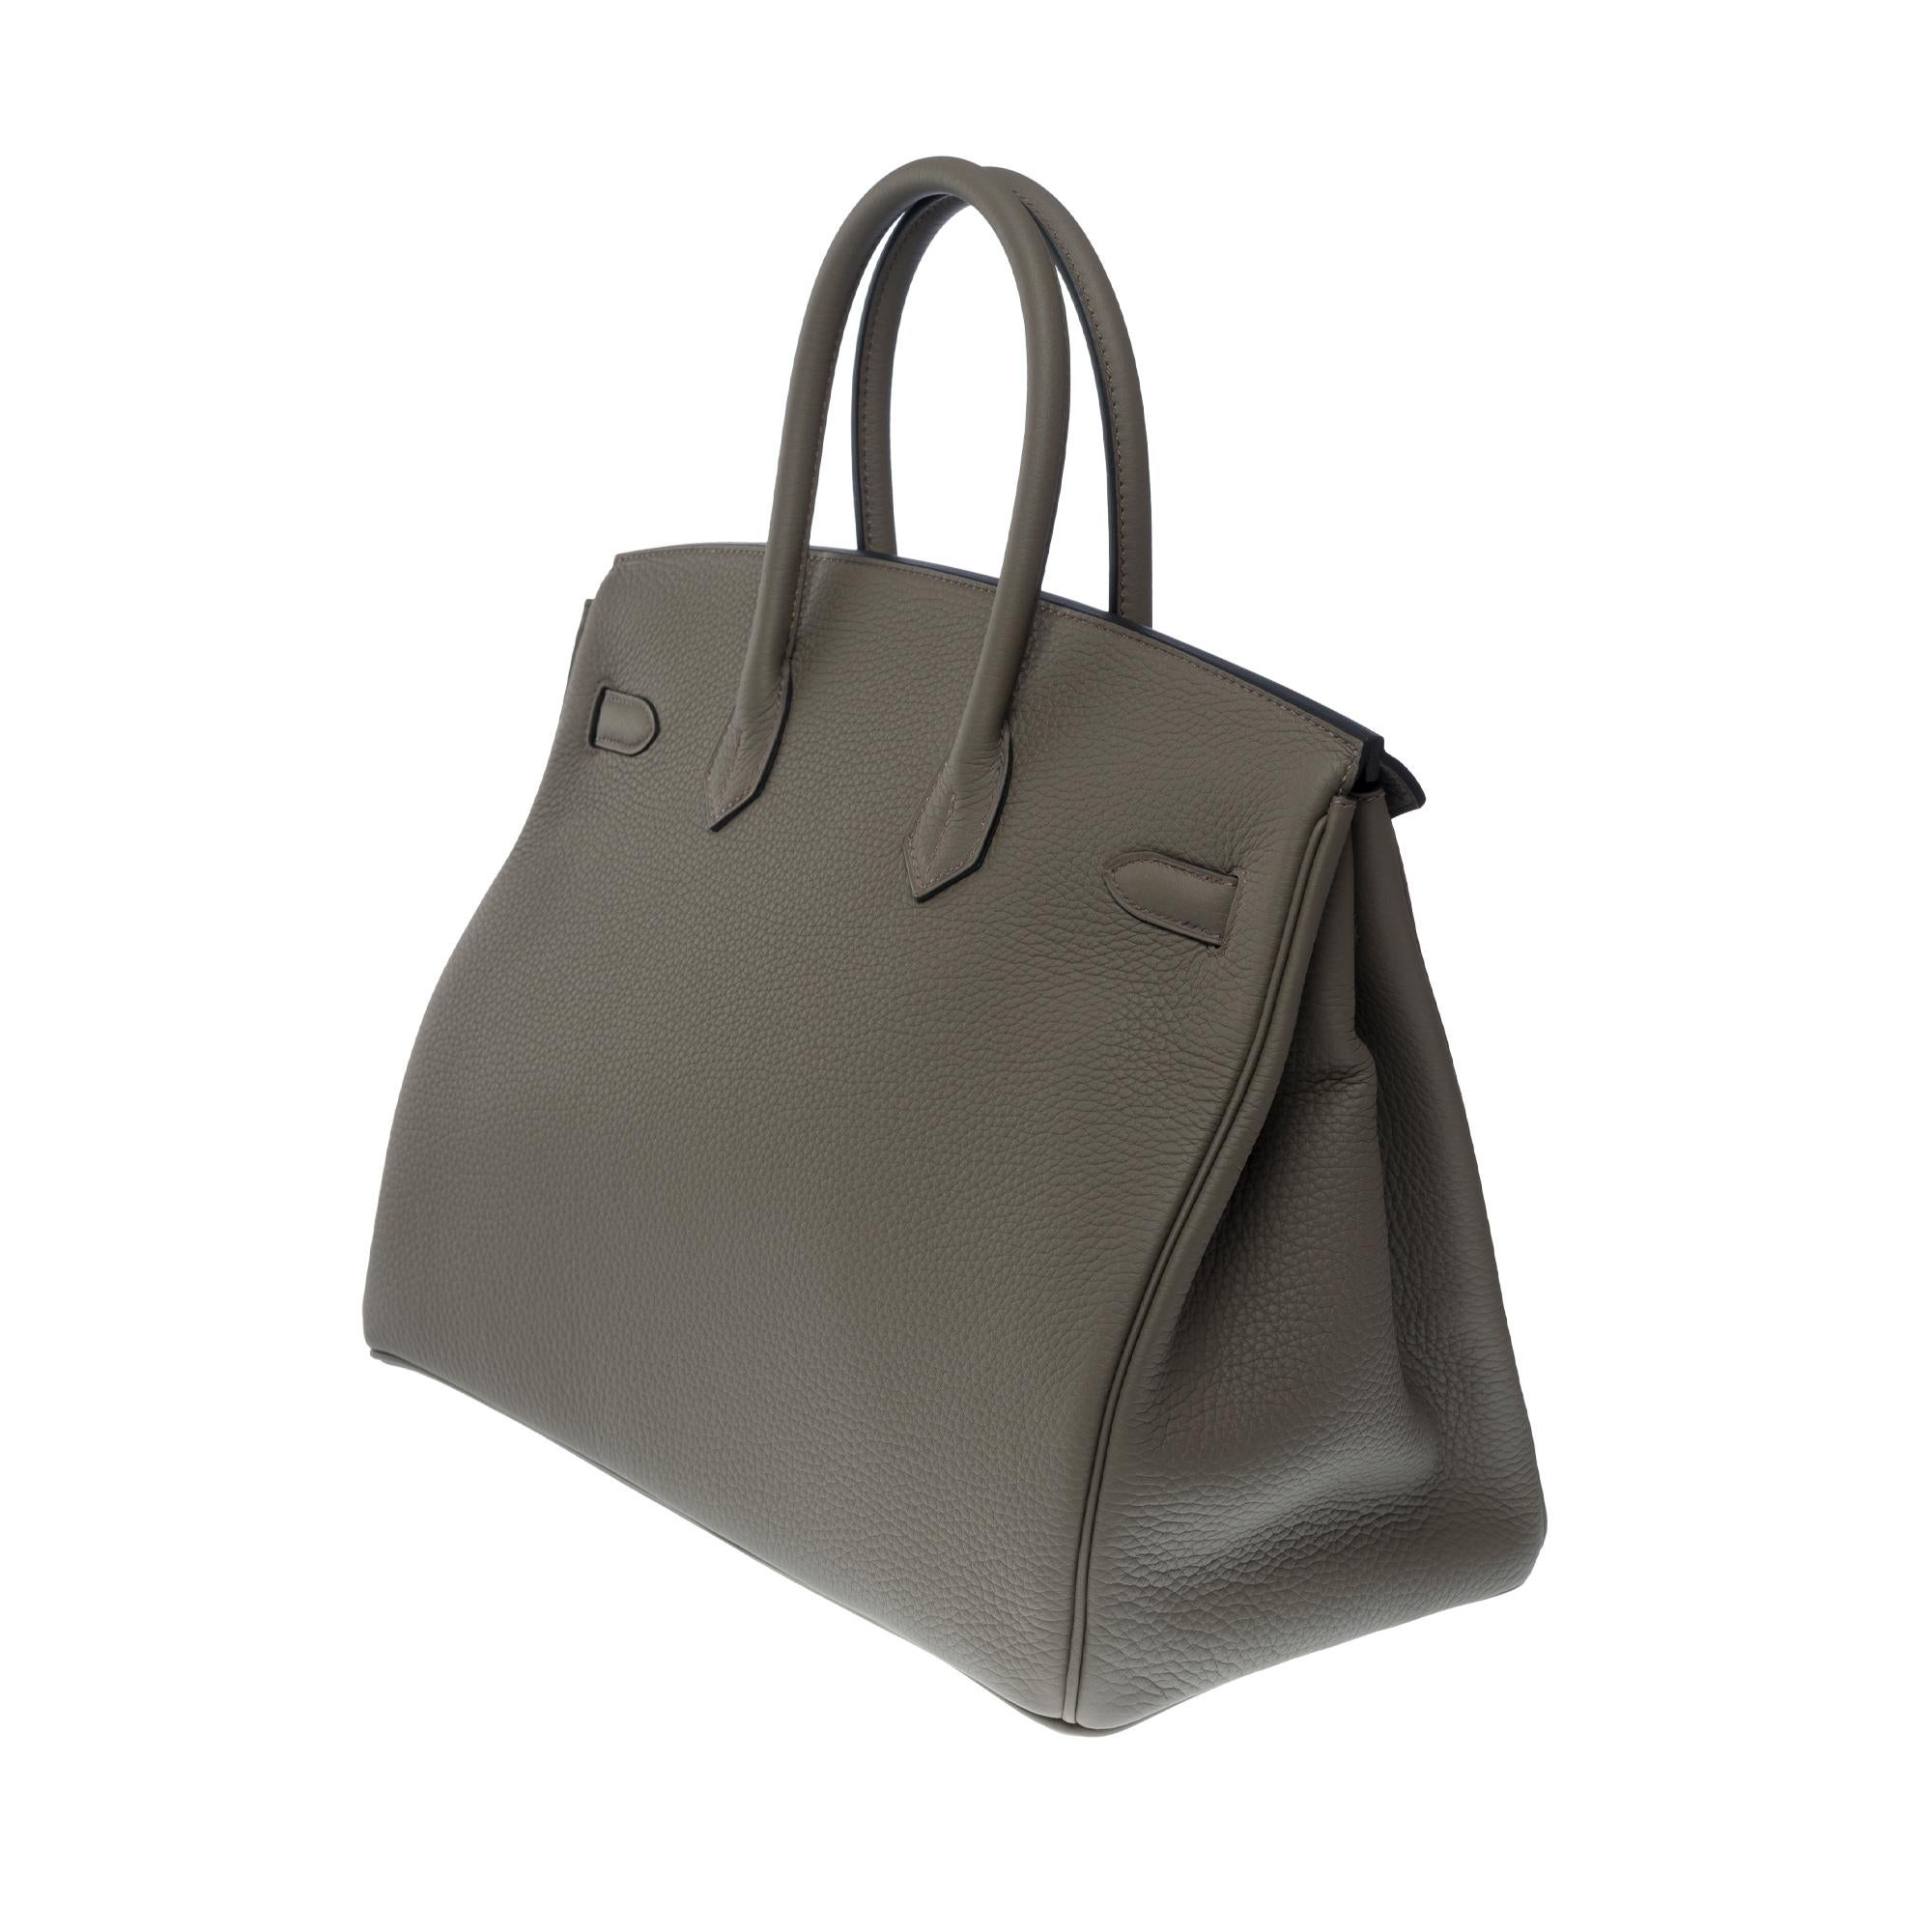 Rare Hermès Birkin 35 HSS (Special Order) handbag in Etain Togo leather, SHW 2